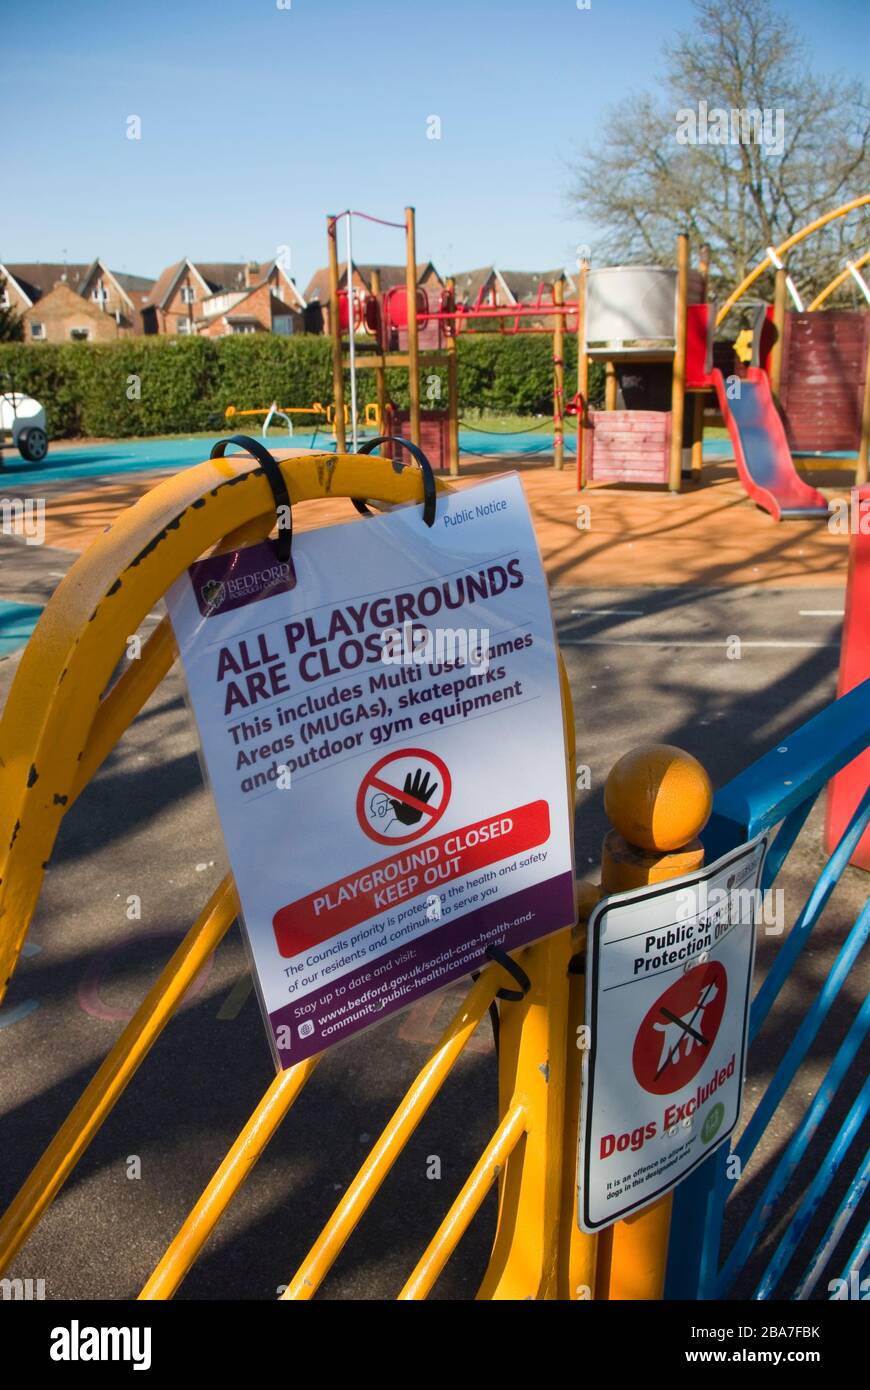 Playground Closure During Corvid 19 Outbreak Stock Photo